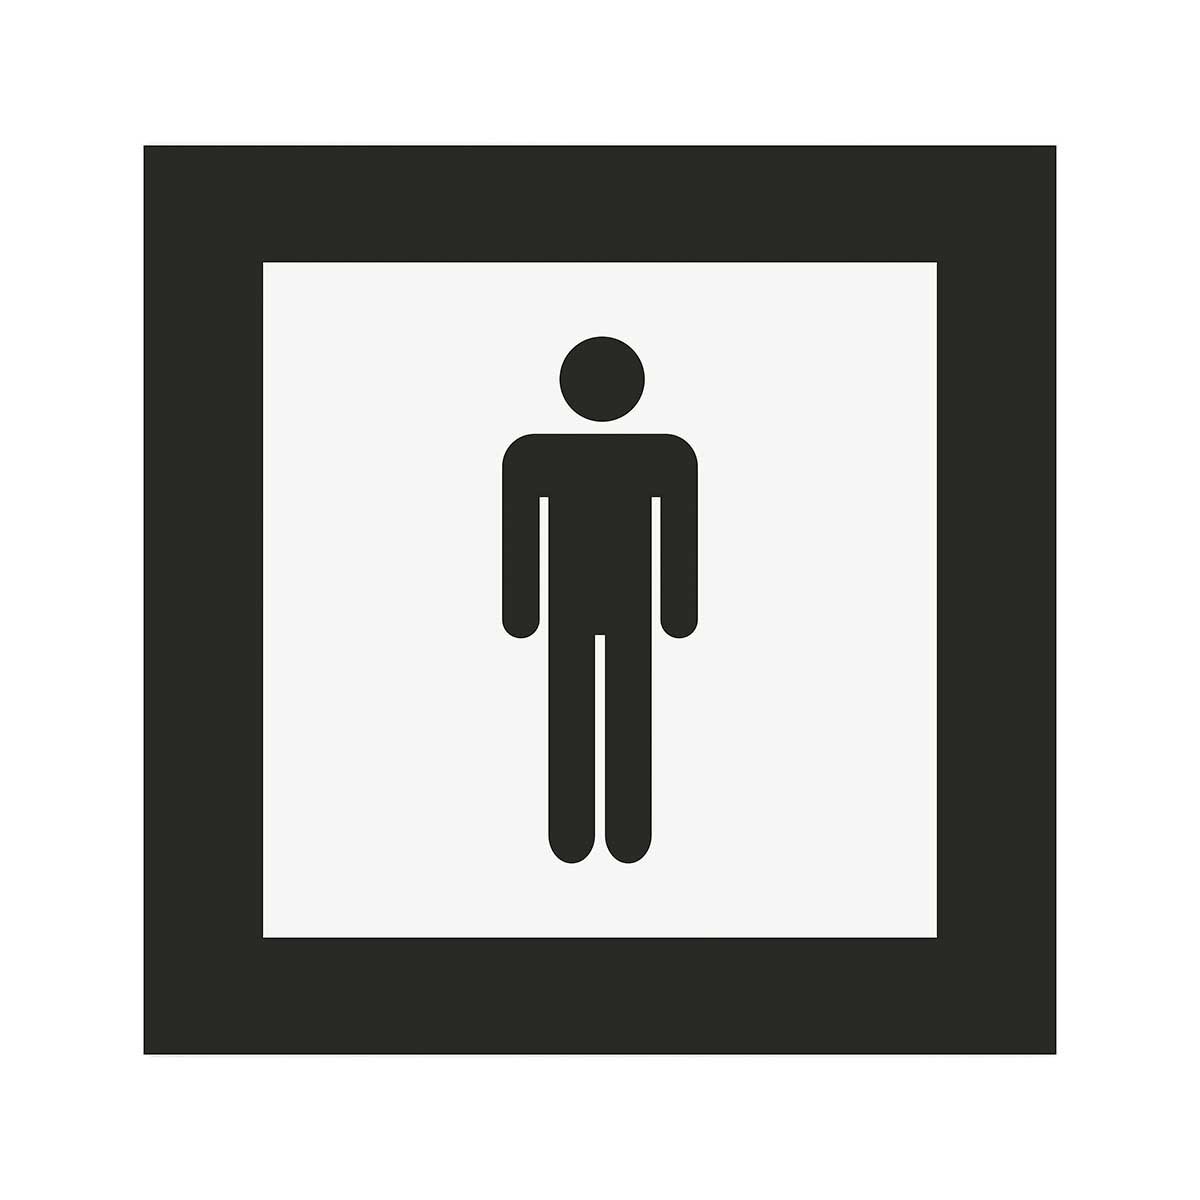 Acrylic Men Signs for Restroom Bathroom Signs white/black symbol Bsign